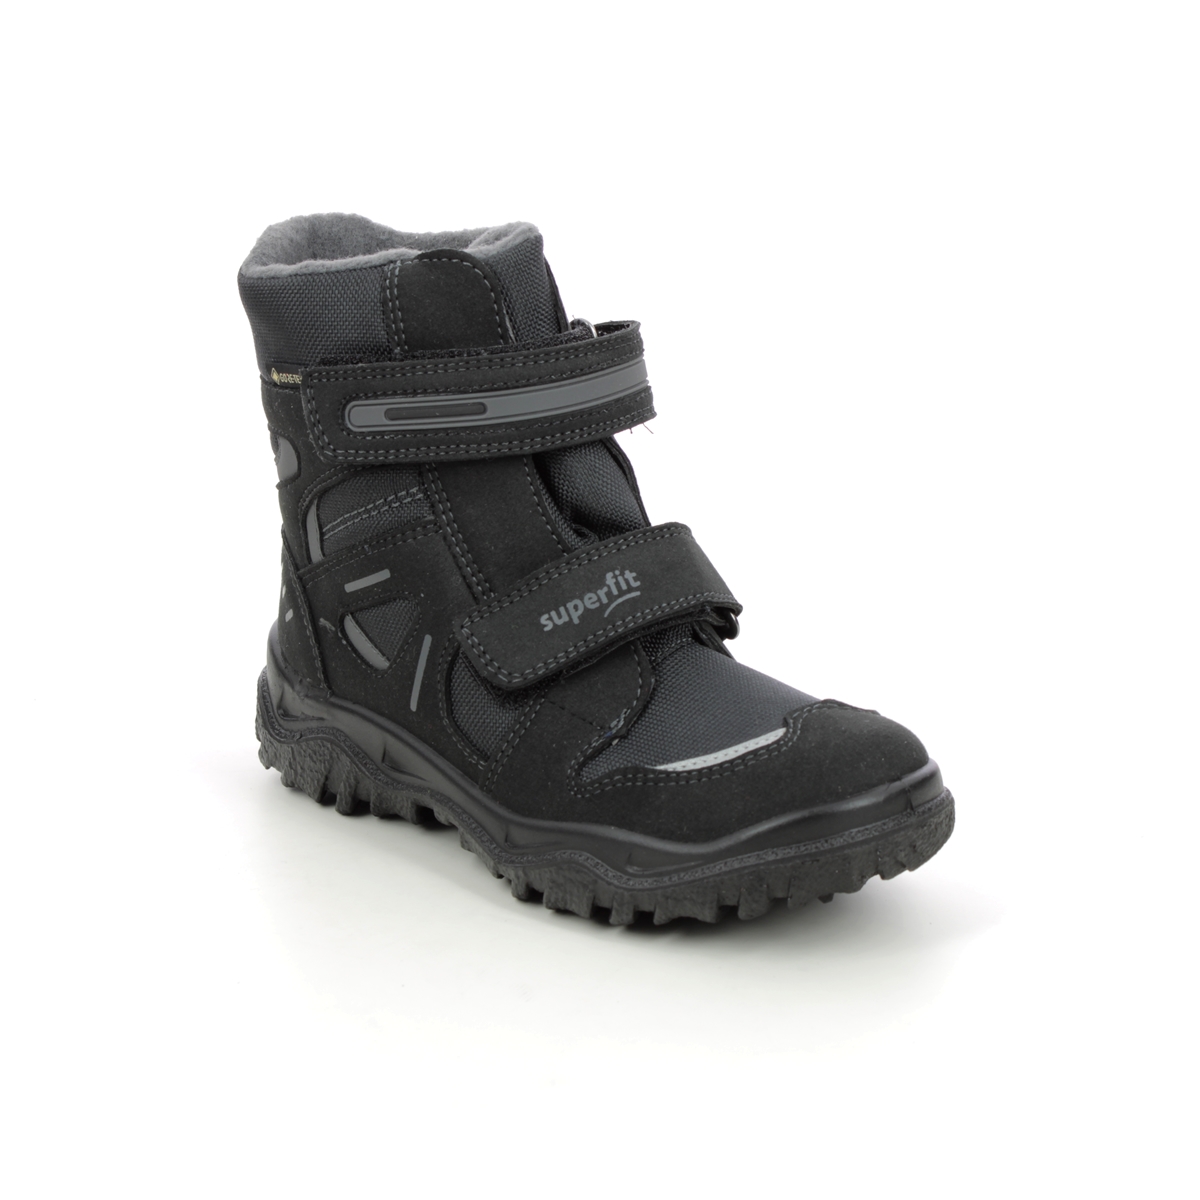 Superfit Husky Jnr Gore Black Kids boys boots 0809080-0600 in a Plain  in Size 28